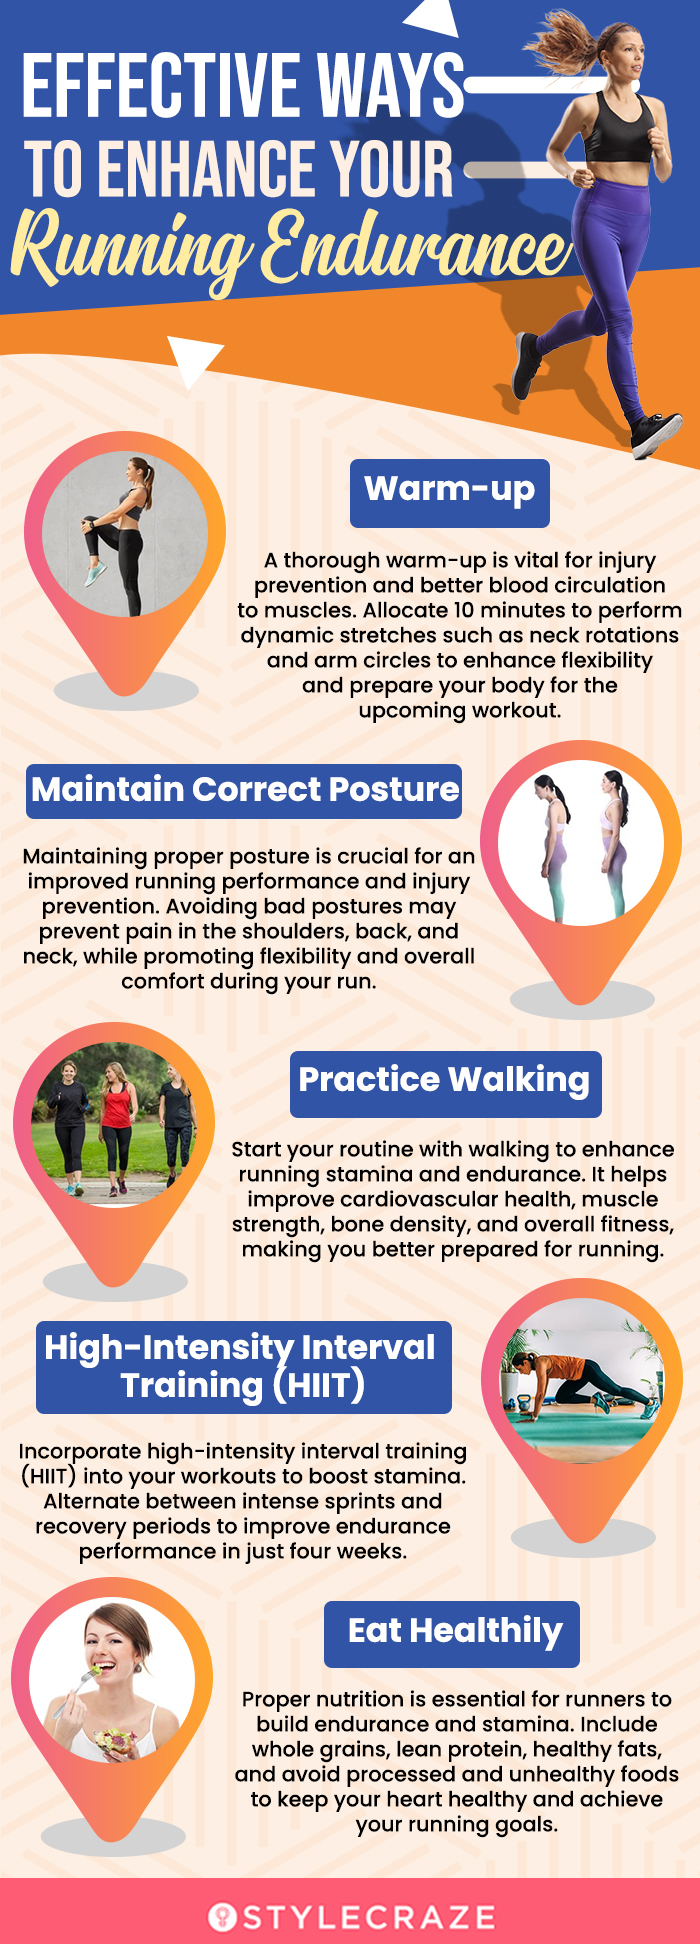 How to Improve Walking Stamina